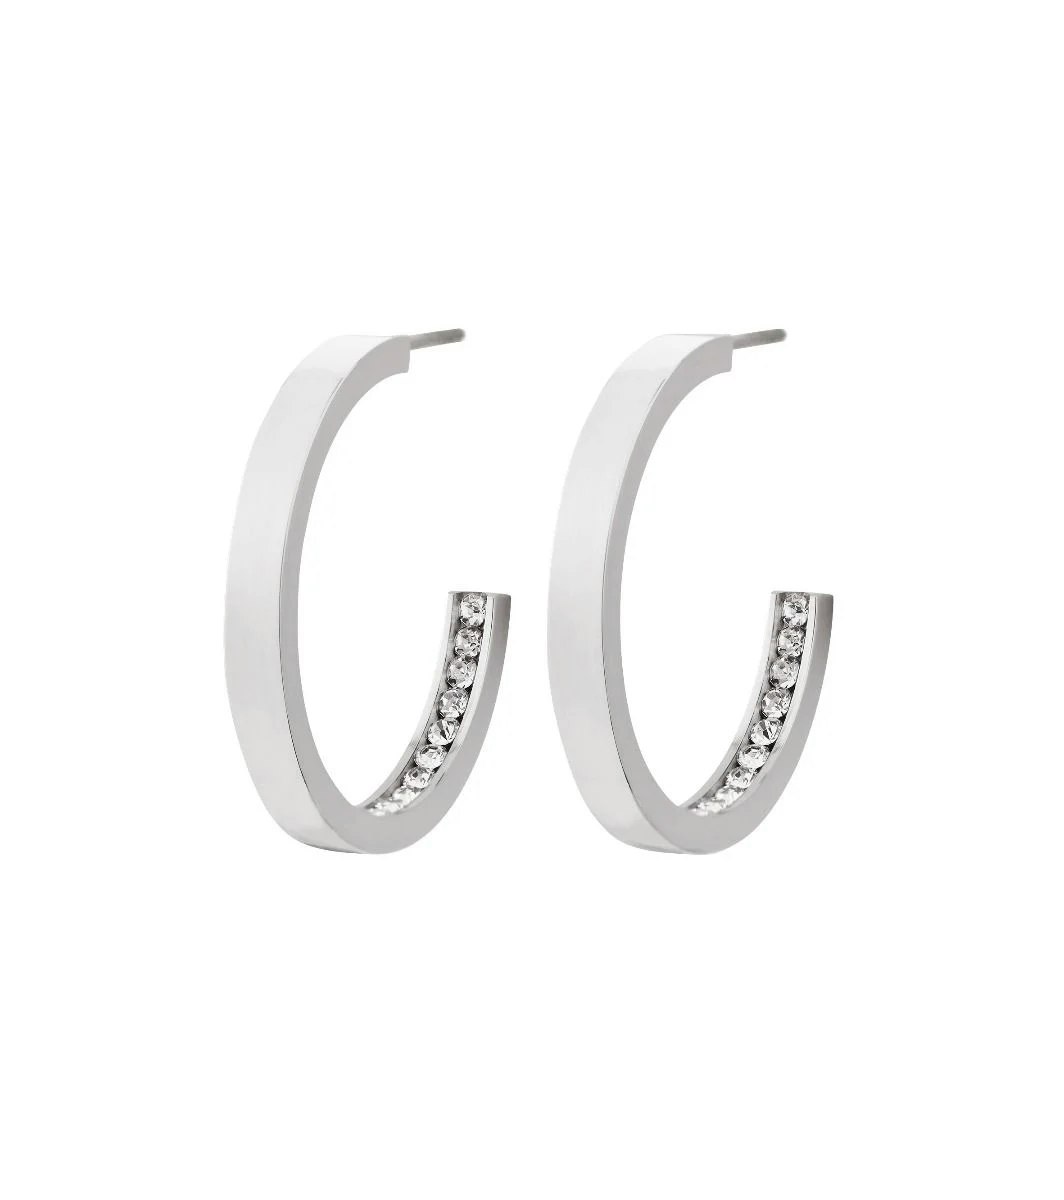 Edblad Monaco Earrings S Silver